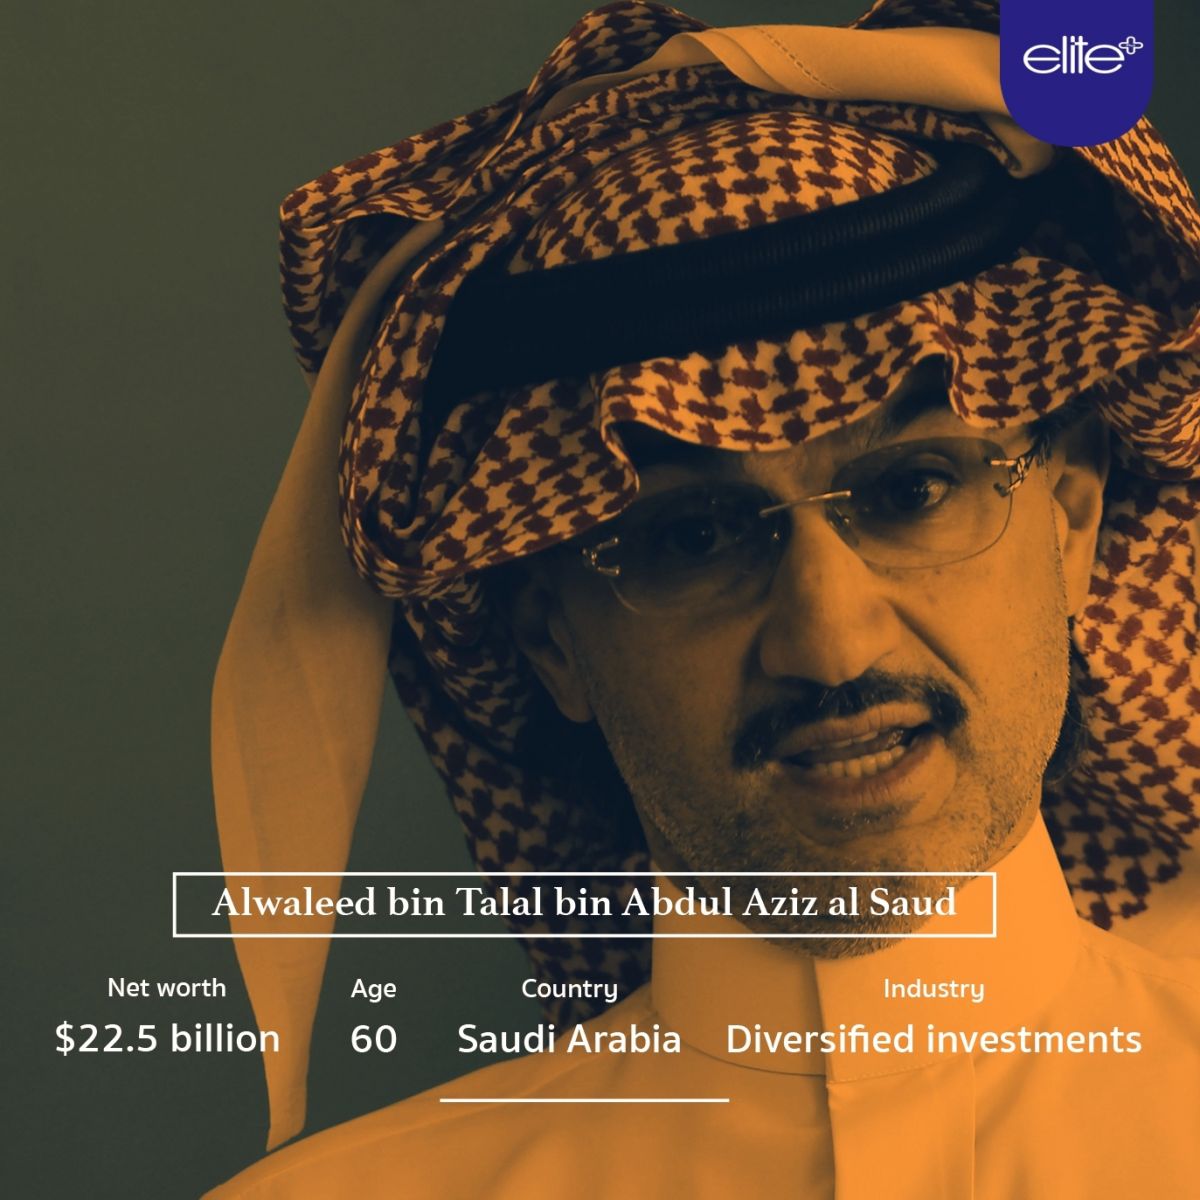 Alwaleed bin Talal bin Abdul Aziz al Saud